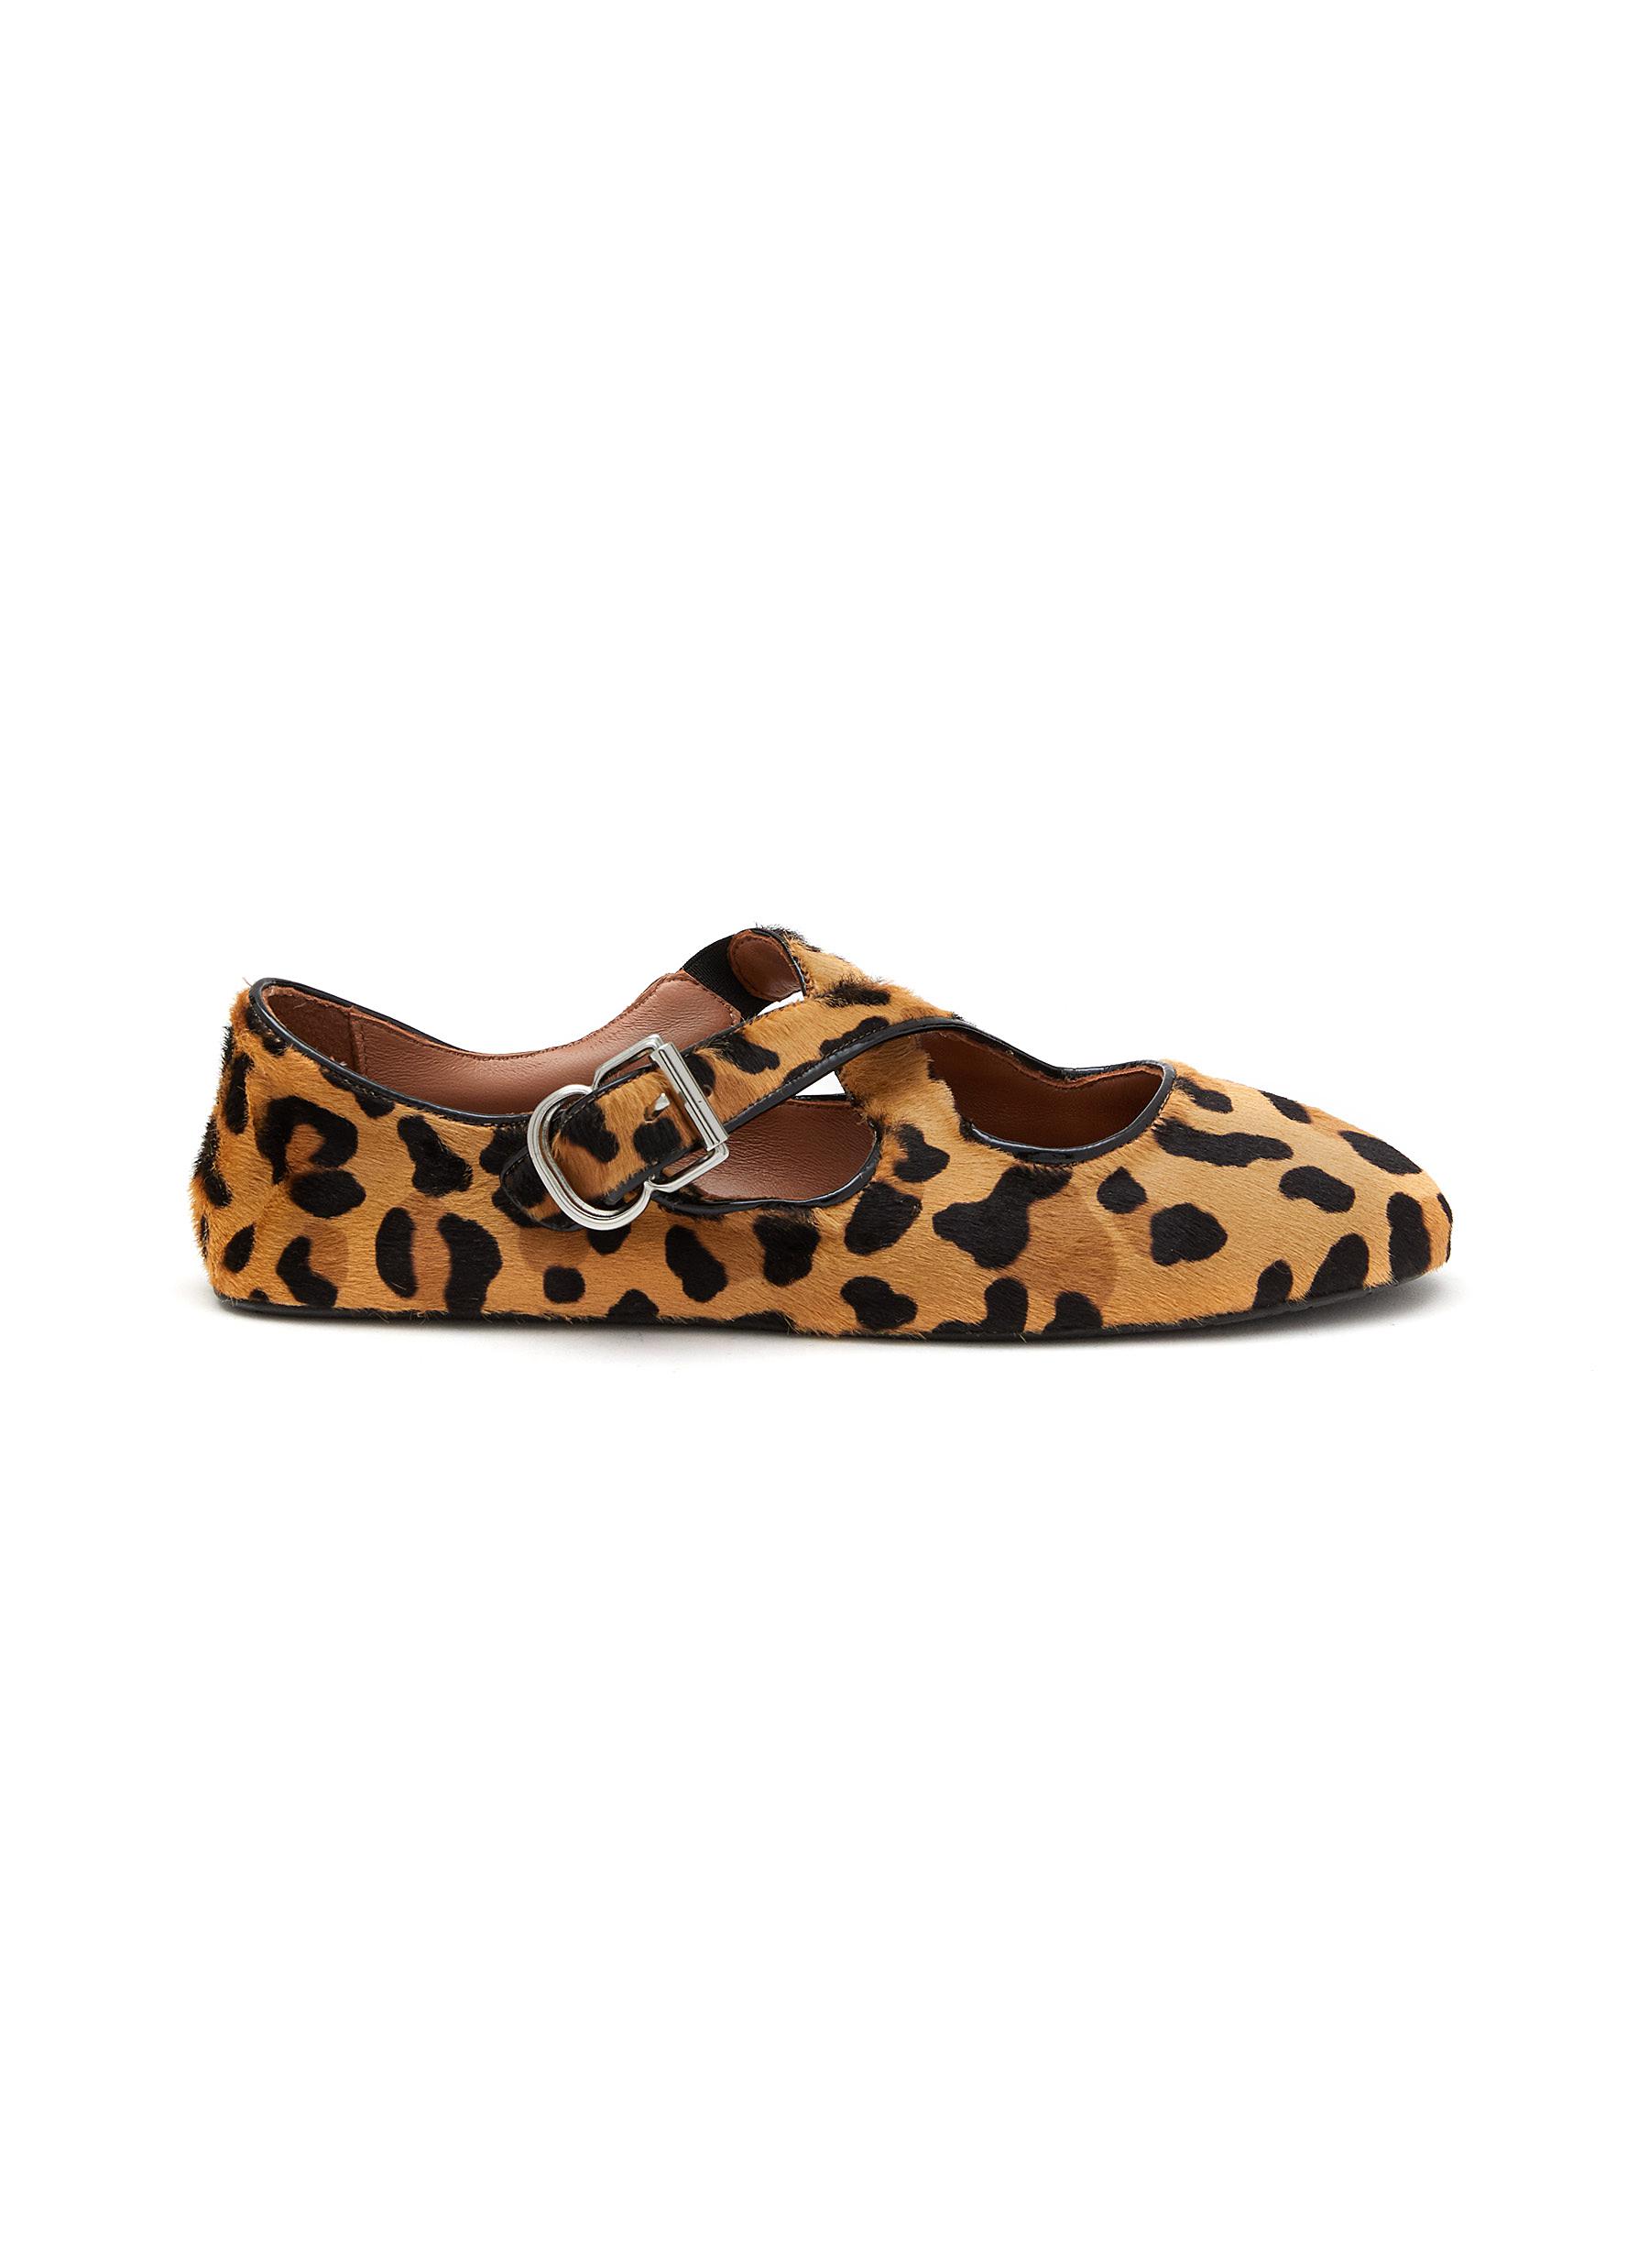 Crisscross Strap Leopard Print Leather Ballerina Flats